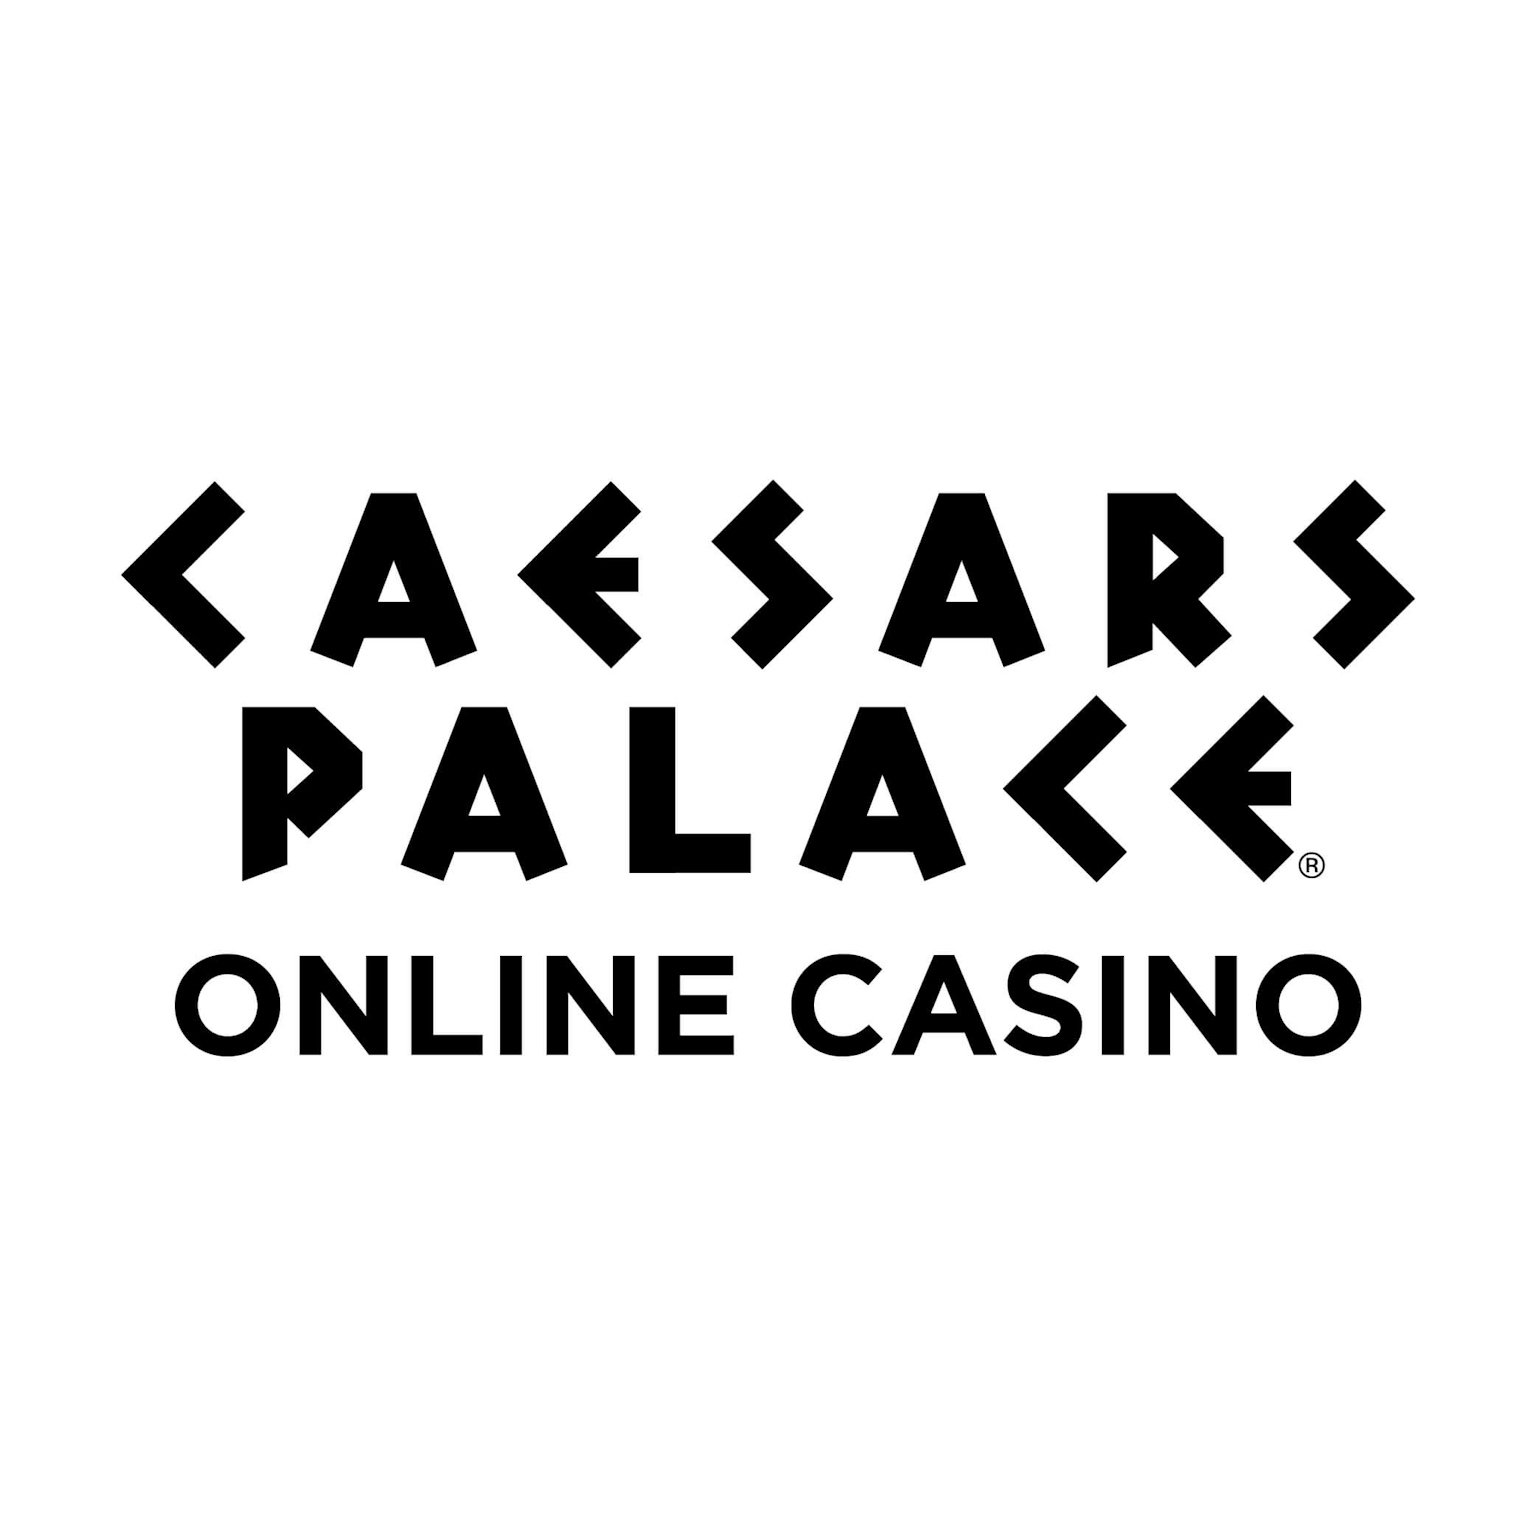 Caesars Palace Online Casino